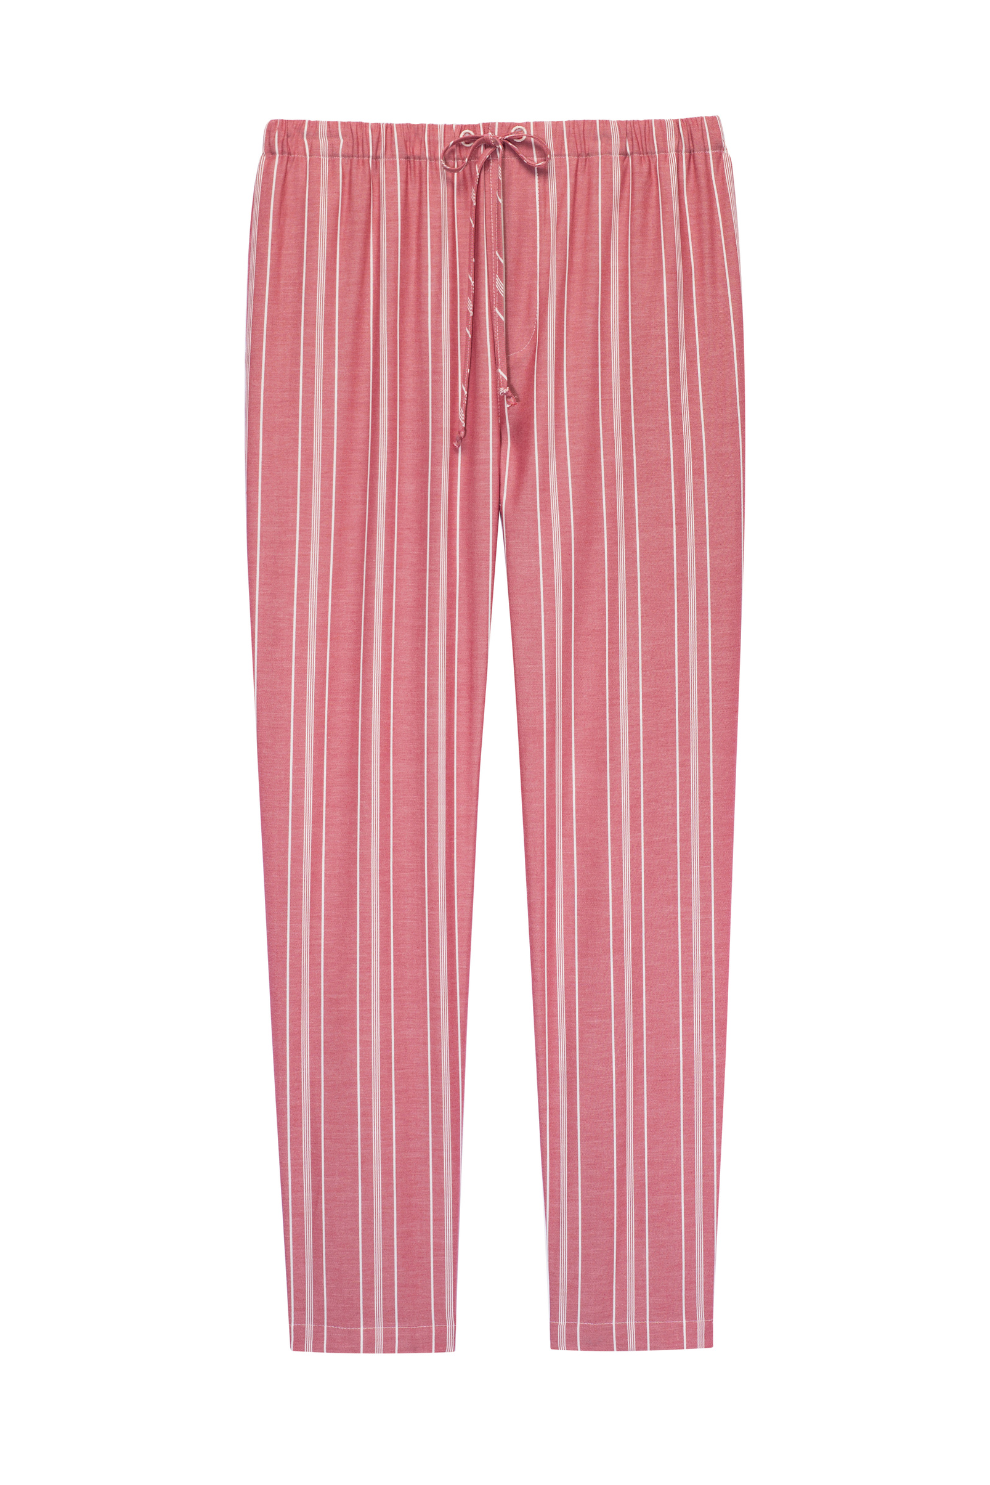 Uno Old School Red & White Pyjama